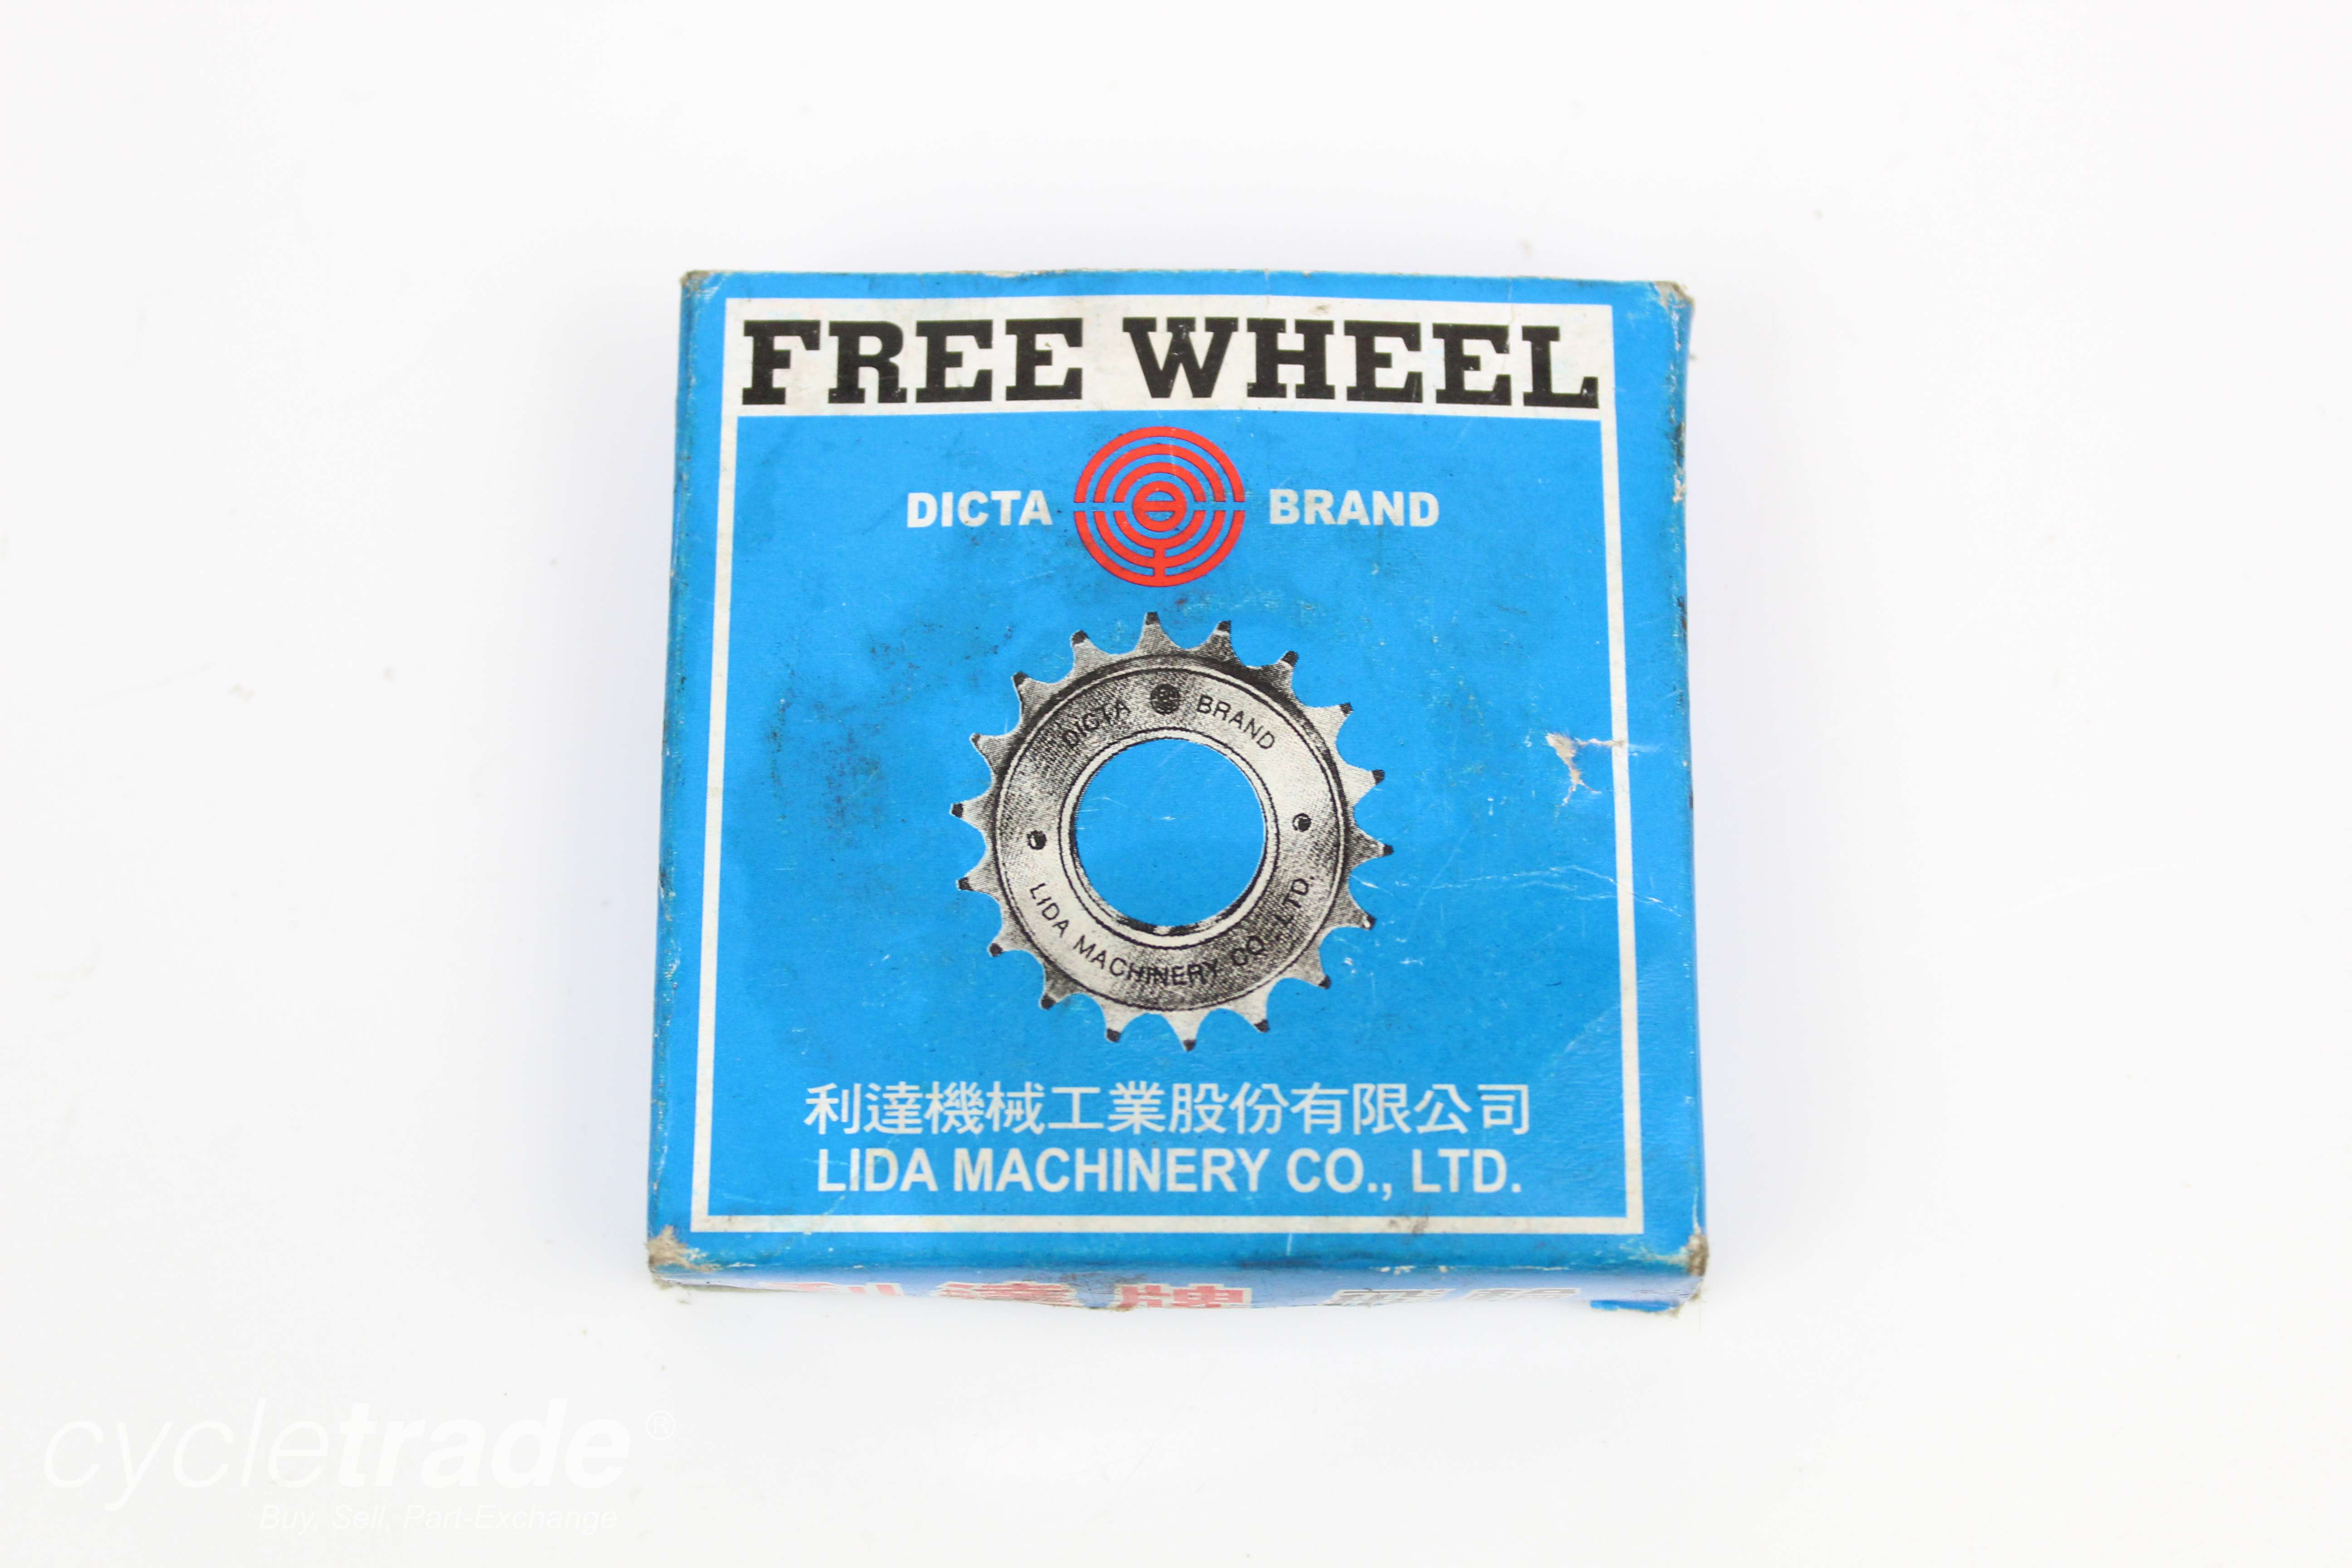 Freewheel - Dicta Brand Single Speed 14T 1/2"x3/32" - Grade A+ NEW